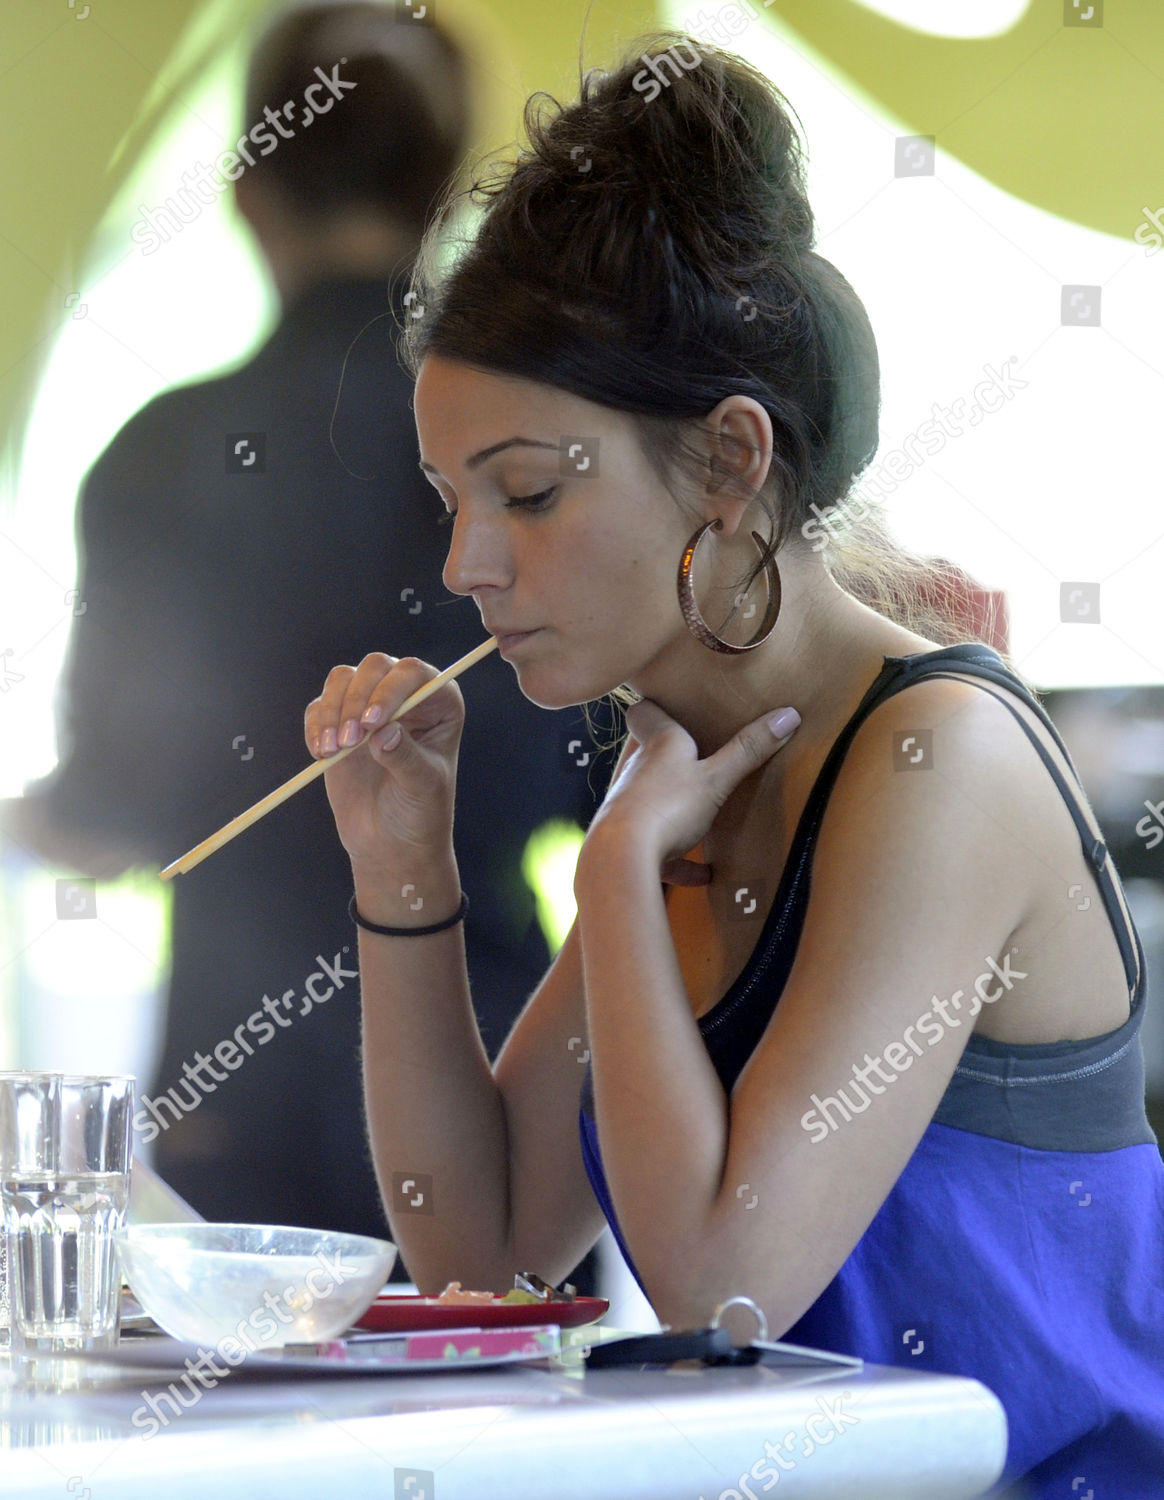 Michelle keegan smoking